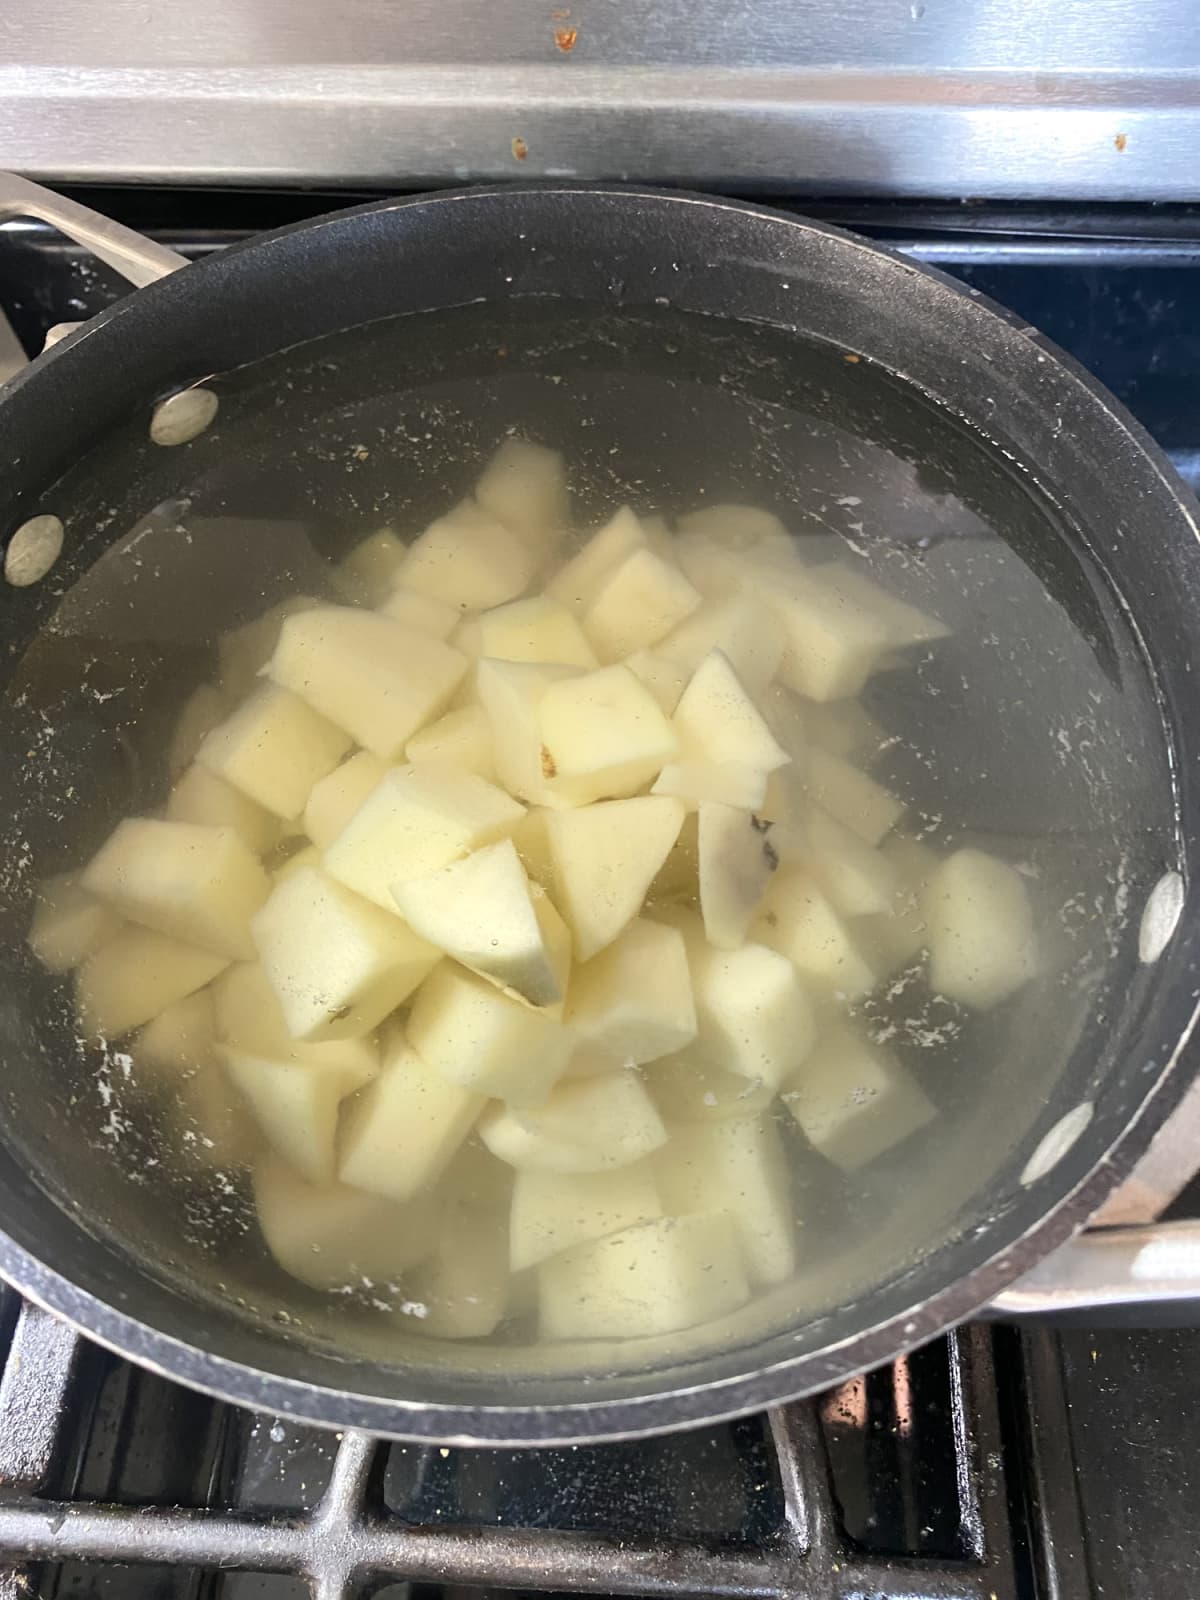 Small potato chunks boiling in a pot